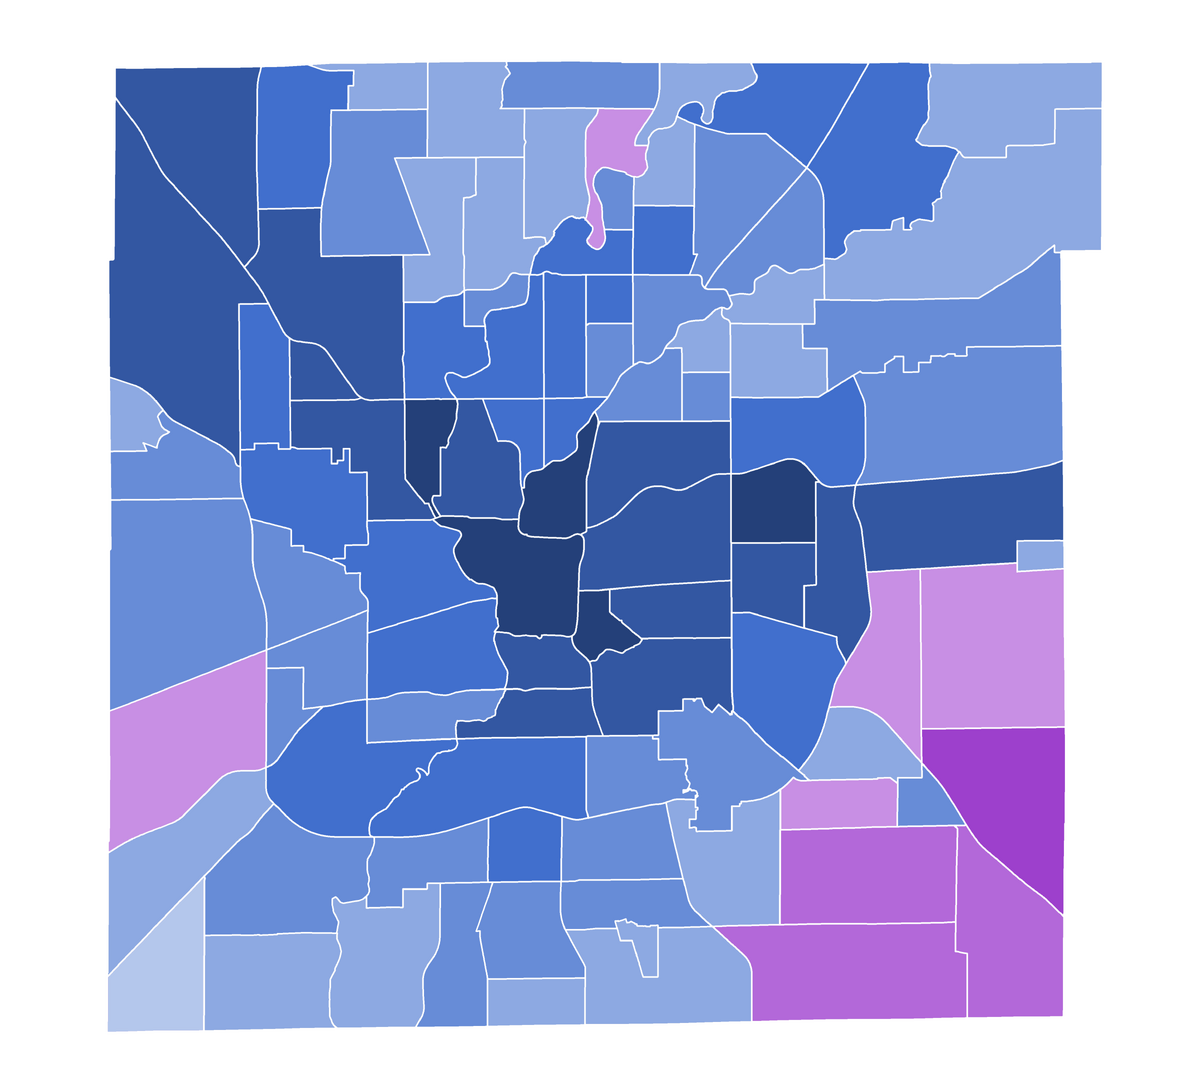 2055 Indianapolis mayoral election (Blackford) Hypothetical Cities